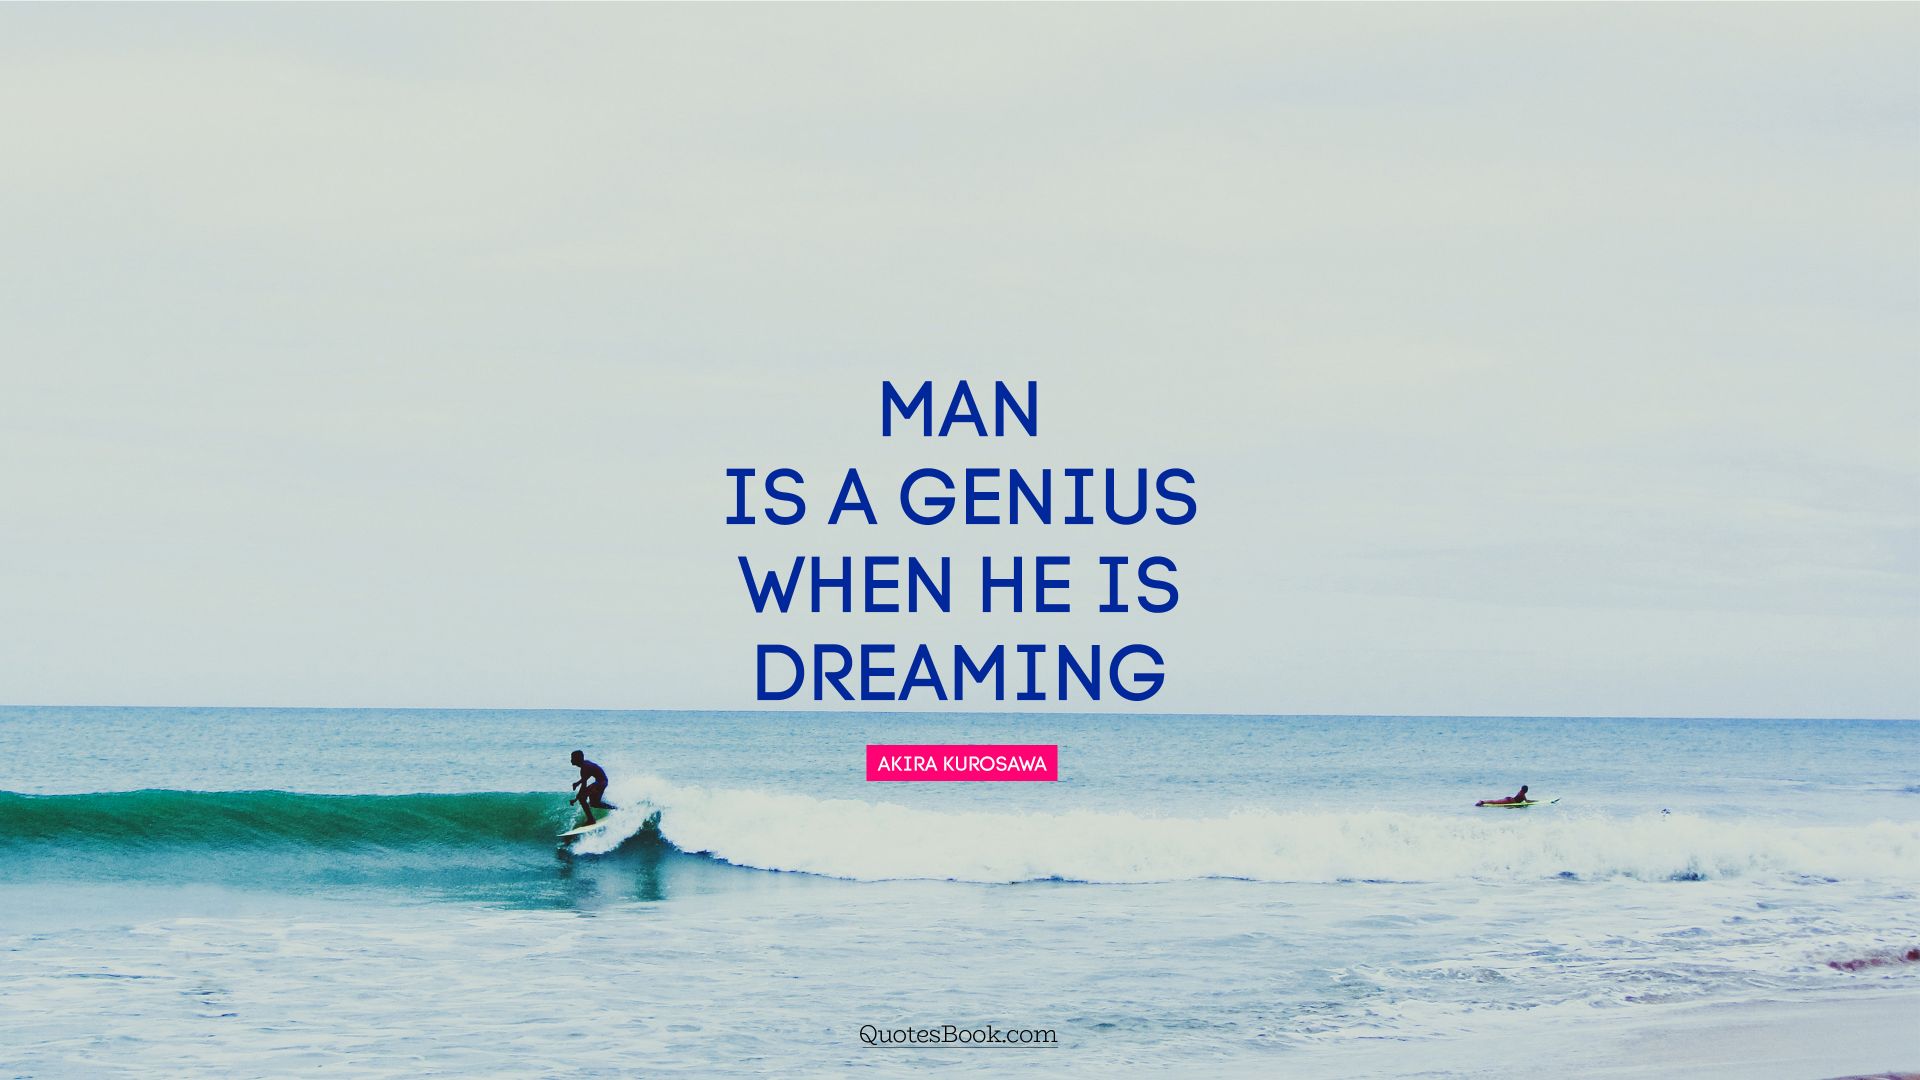 Man is a genius when he is dreaming. - Quote by Akira Kurosawa